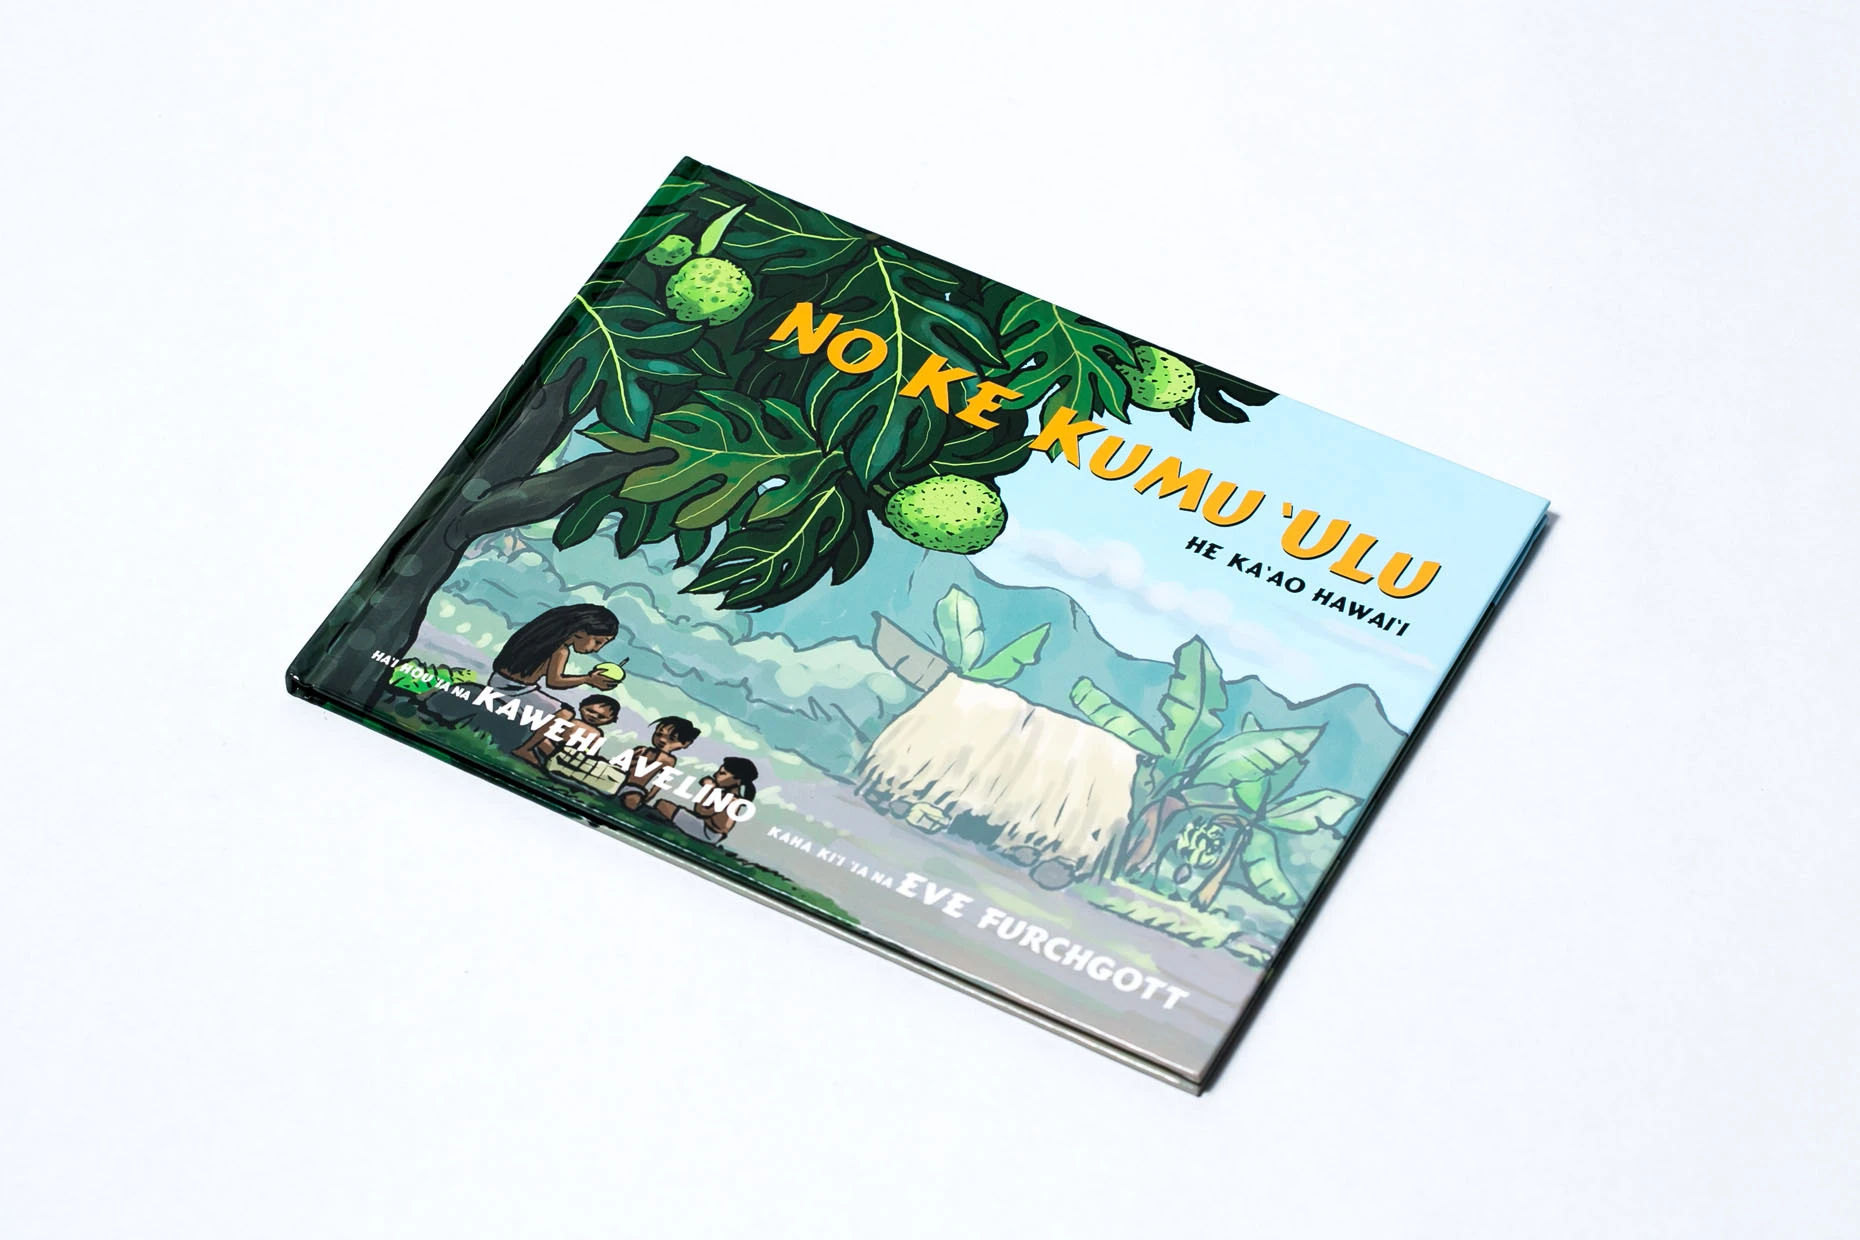 No Ke Kumu 'Ulu / The 'Ulu Tree (bilingual)